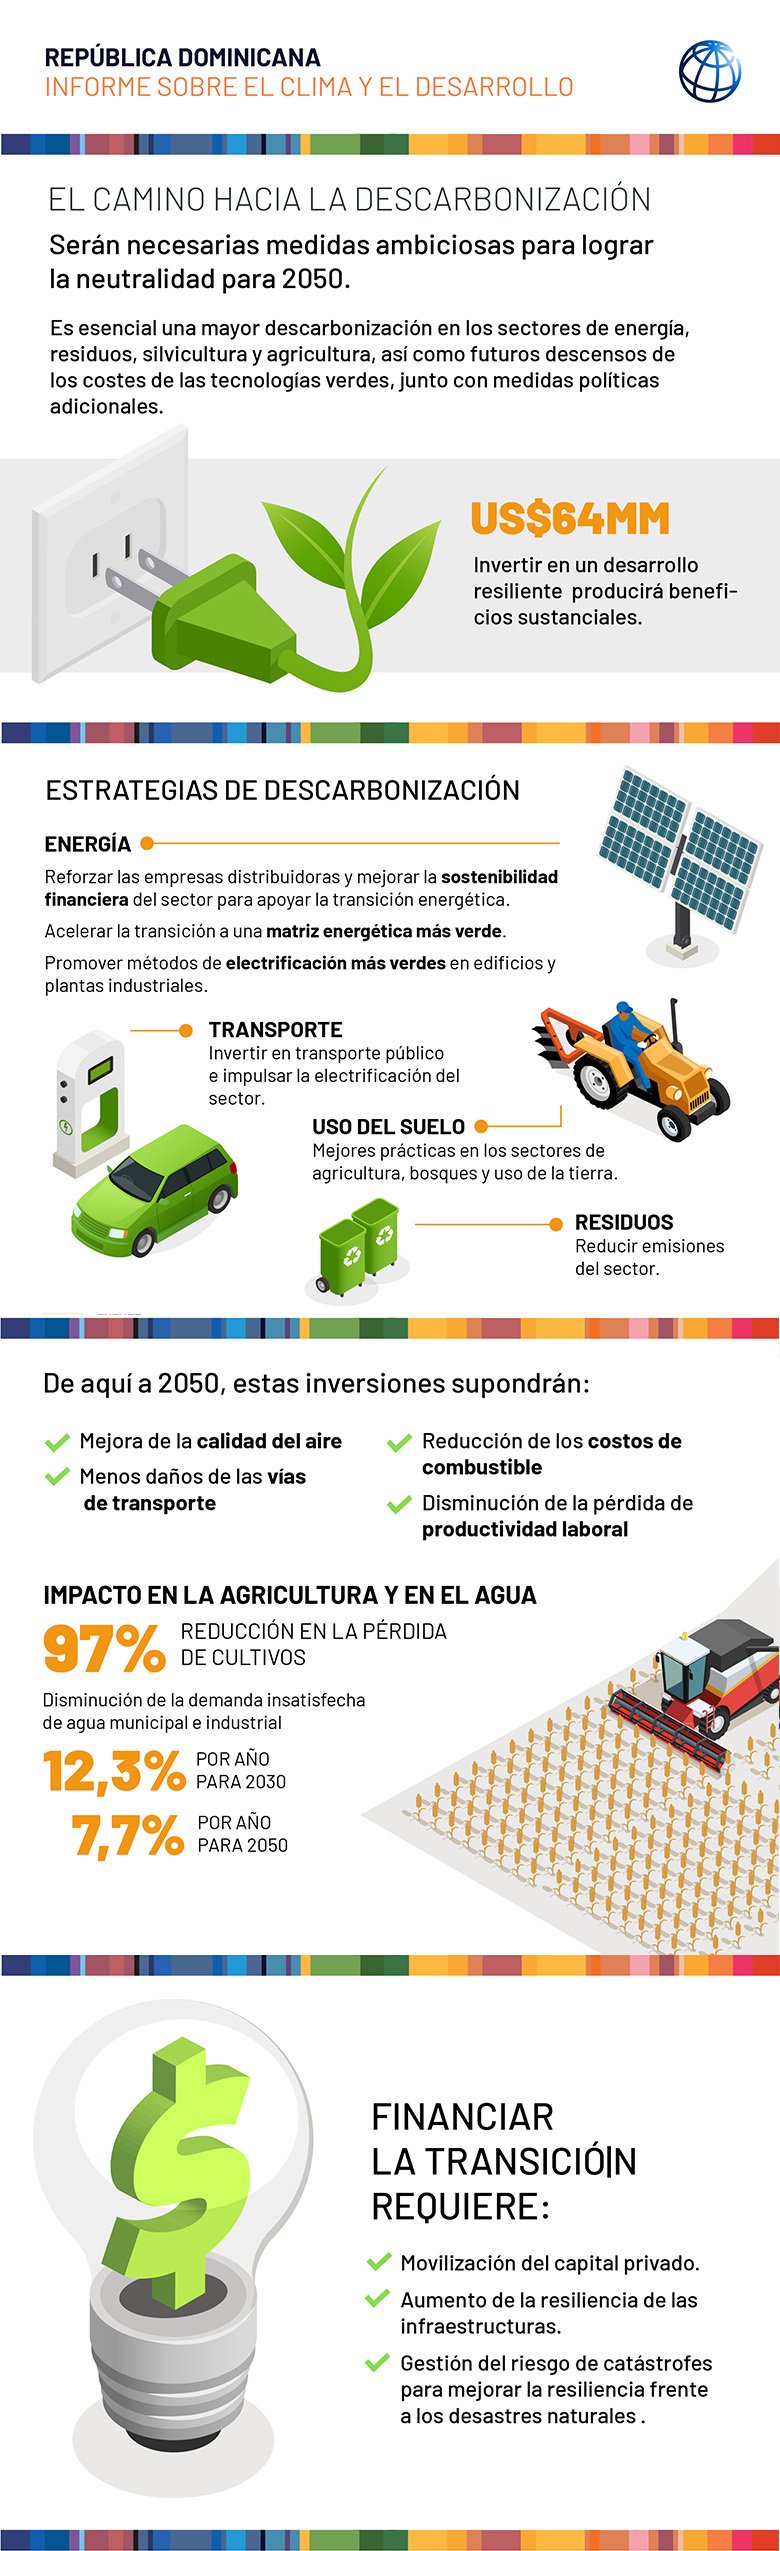 DRCCDR Infographic 2 Spanish